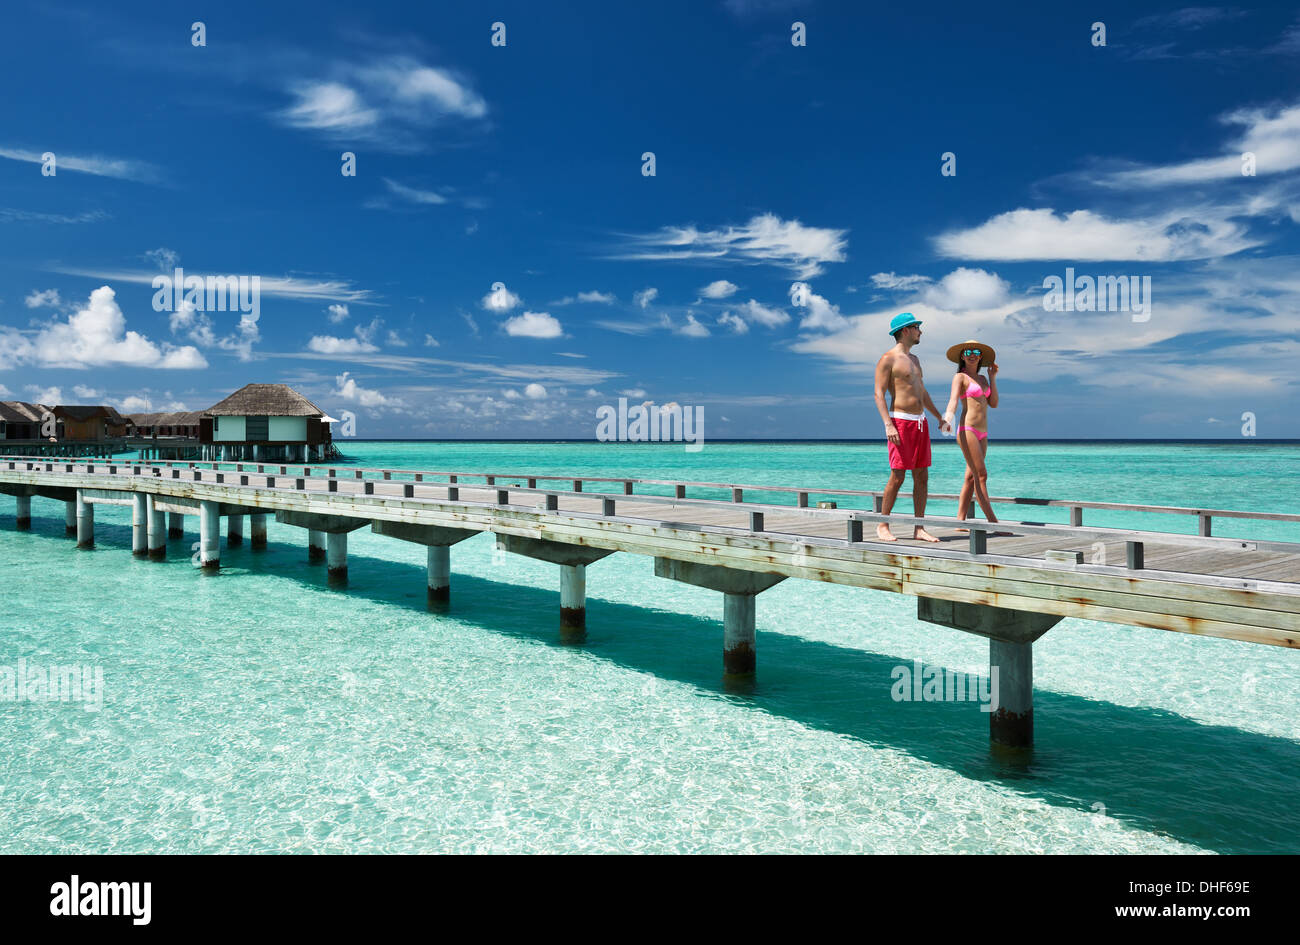 Couple on a beach jetty at Maldives Stock Photo